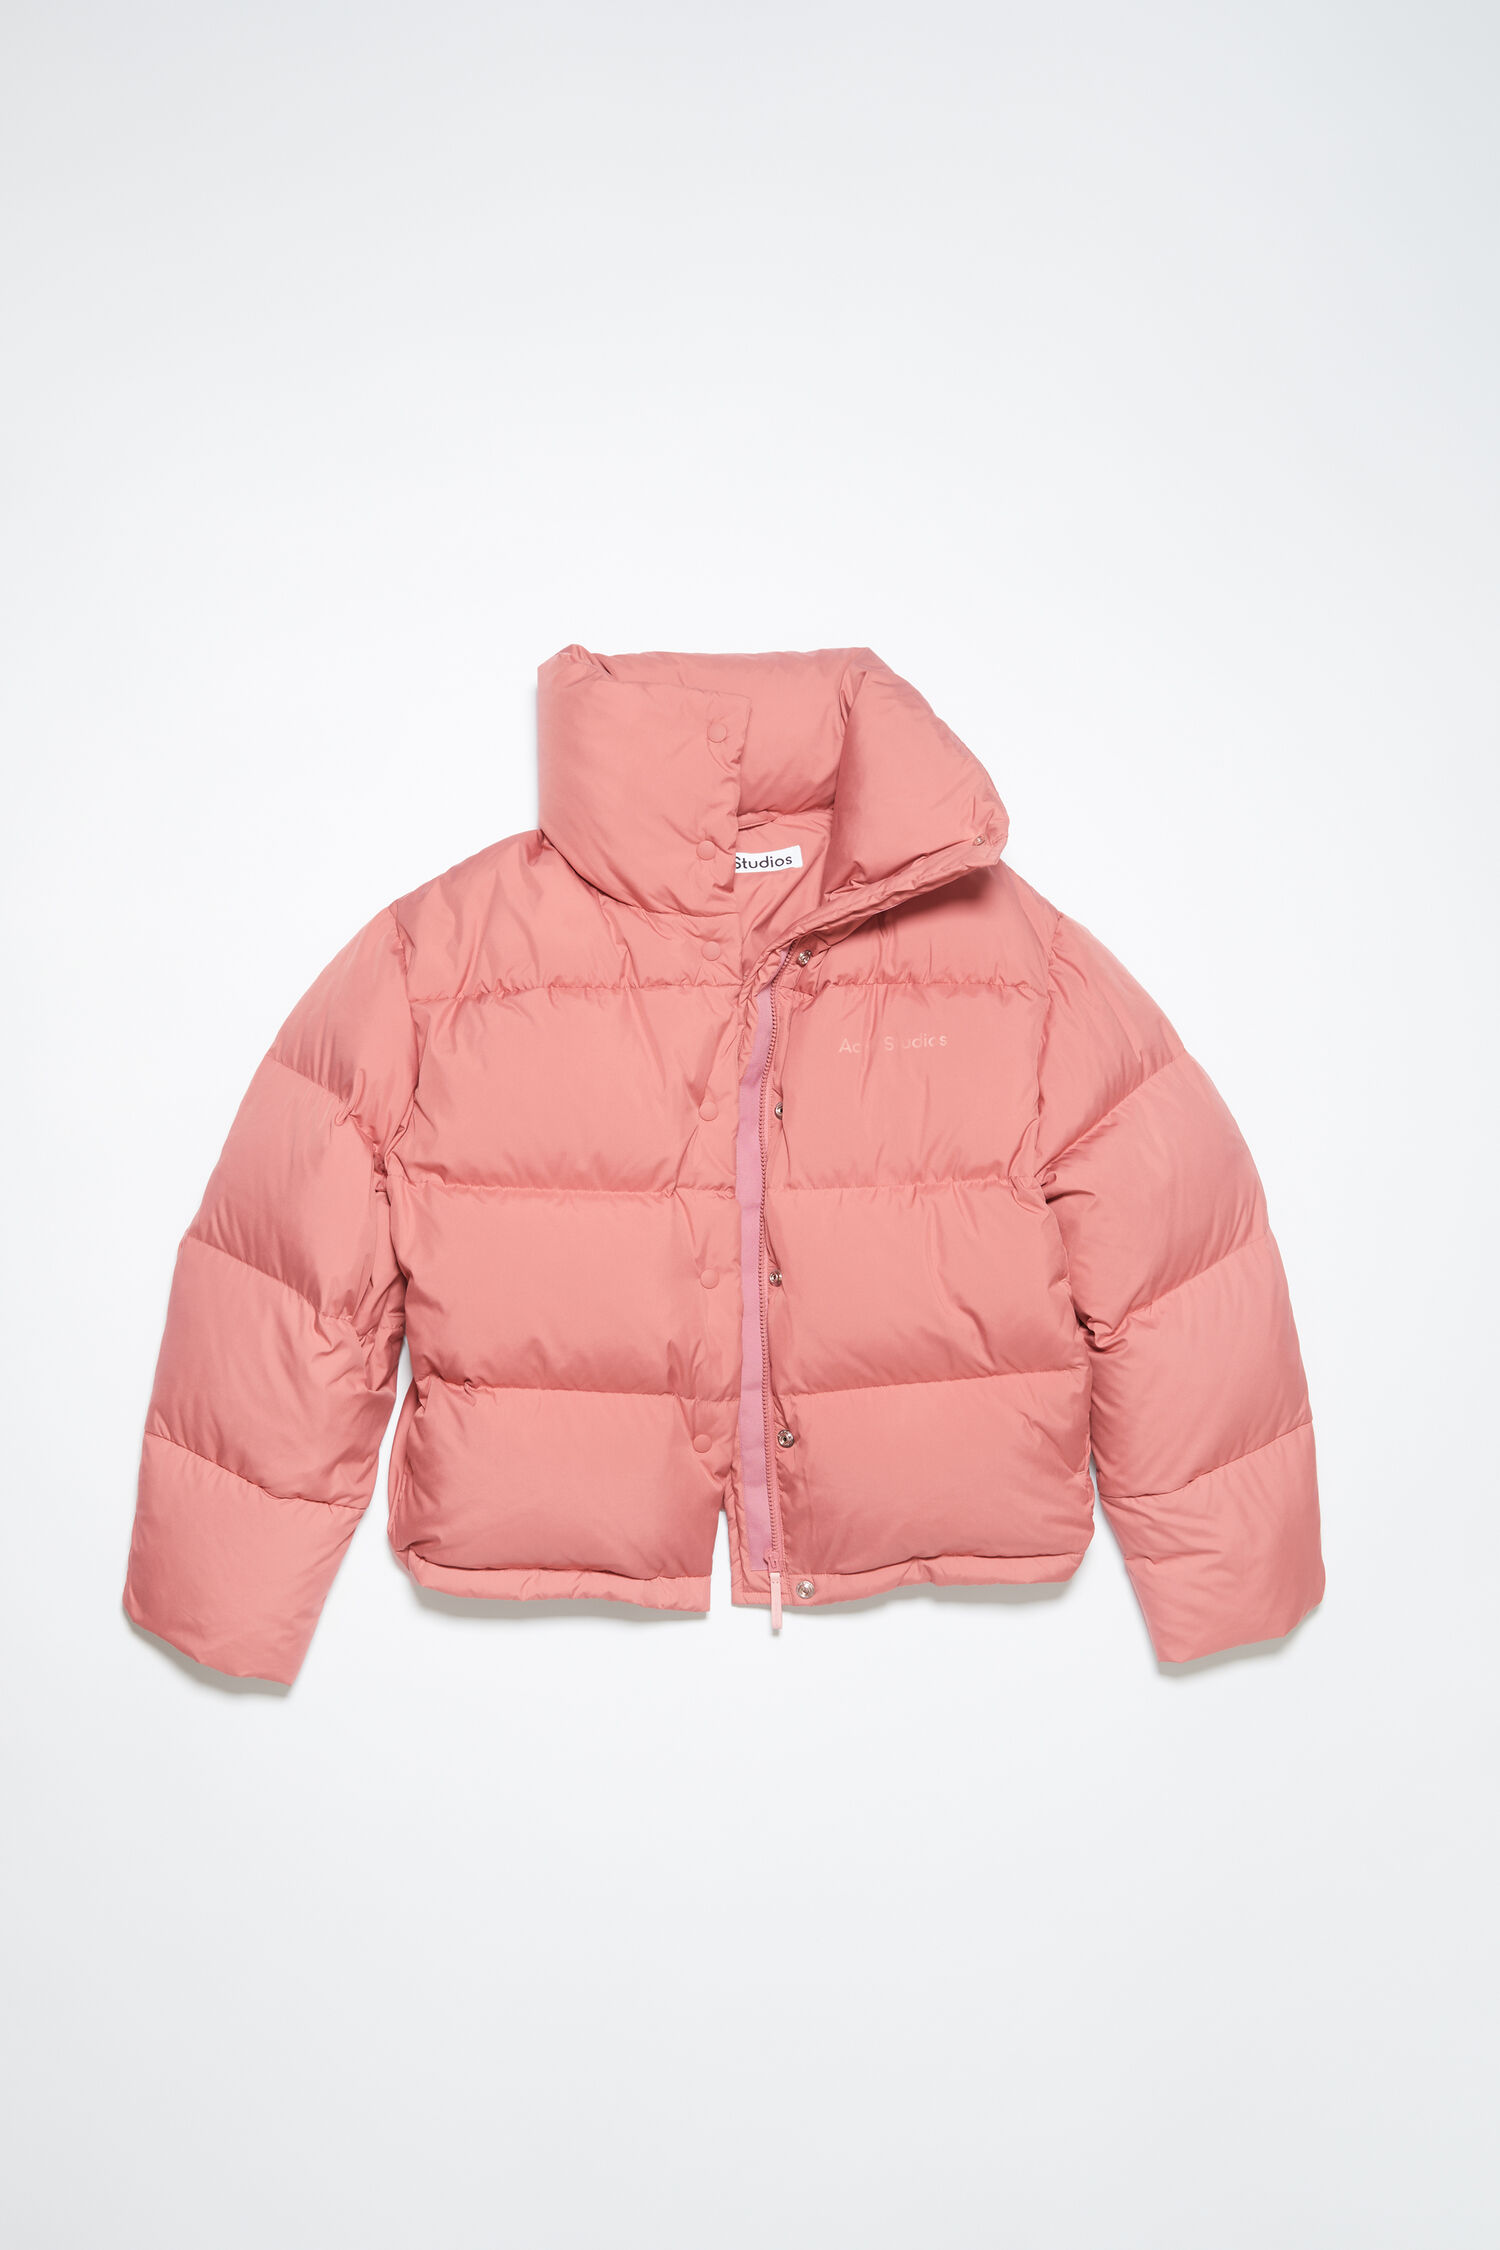 Acne Studios - Puffer jacket - Blush pink